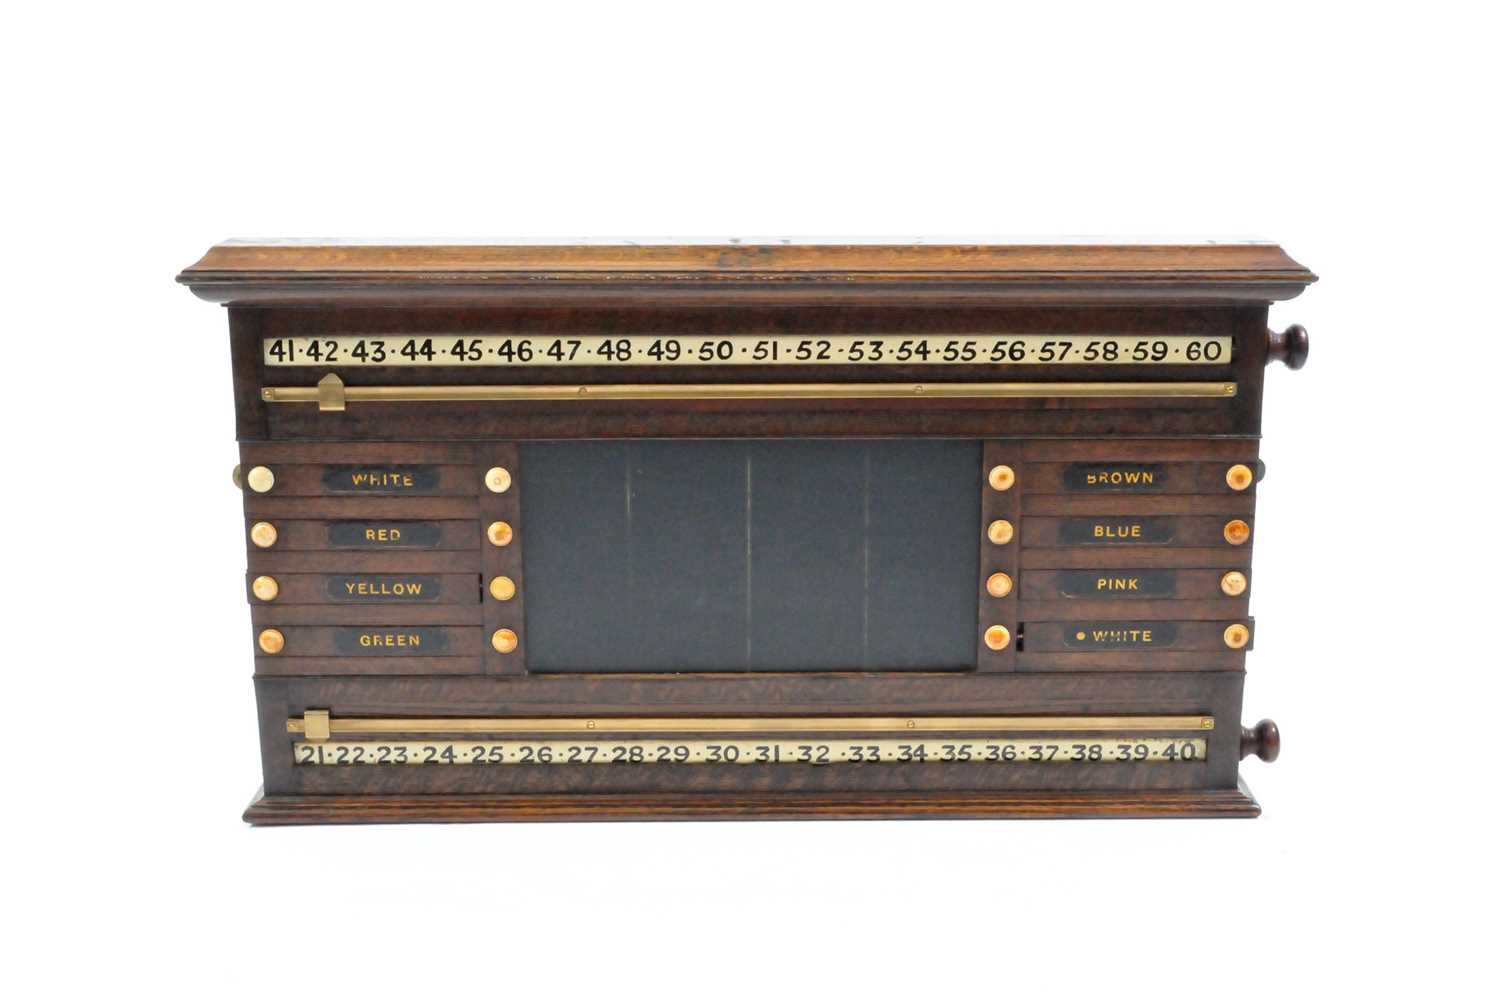 Lot 432 - A good quality late 19th / early 20th century oak framed snooker / billiards score board